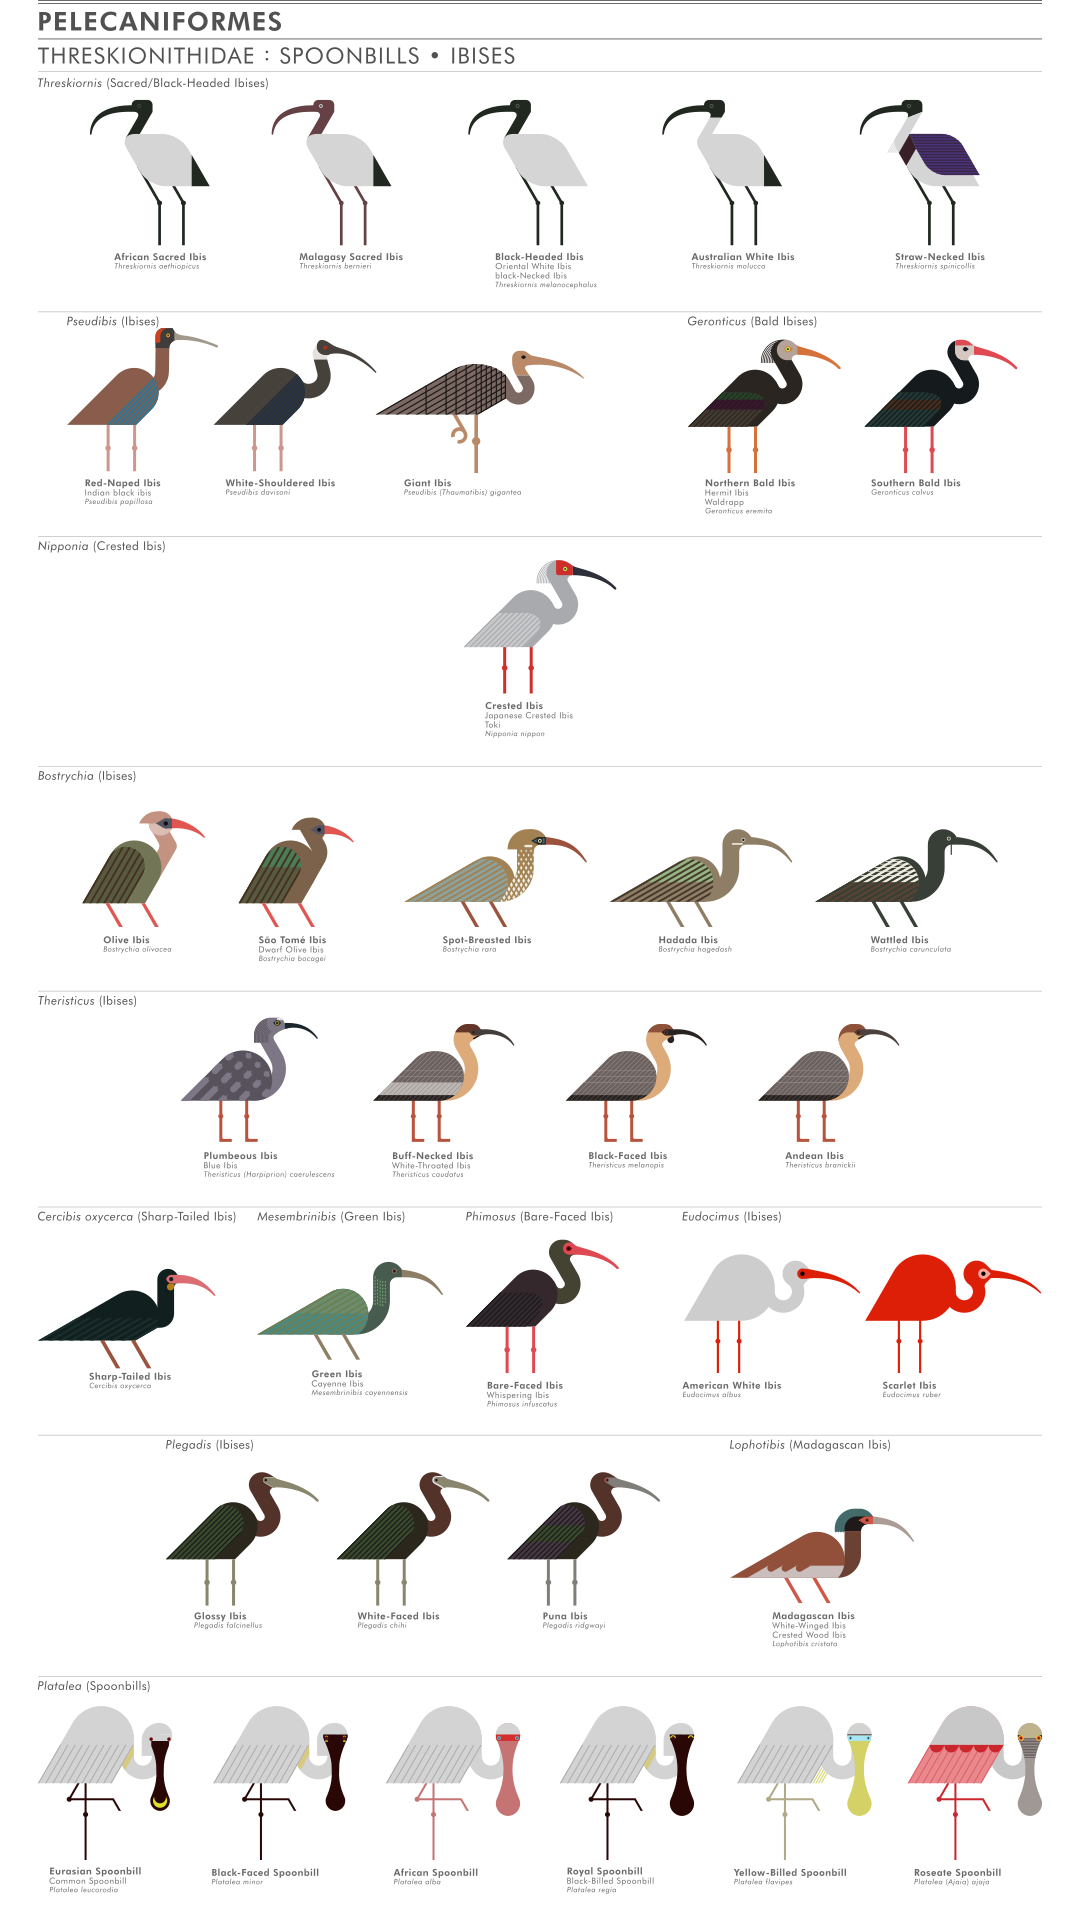 scott partridge - ave - avian vector encyclopedia - ibises spoonbills Threskiornithidae Pelecaniformes - vector bird art